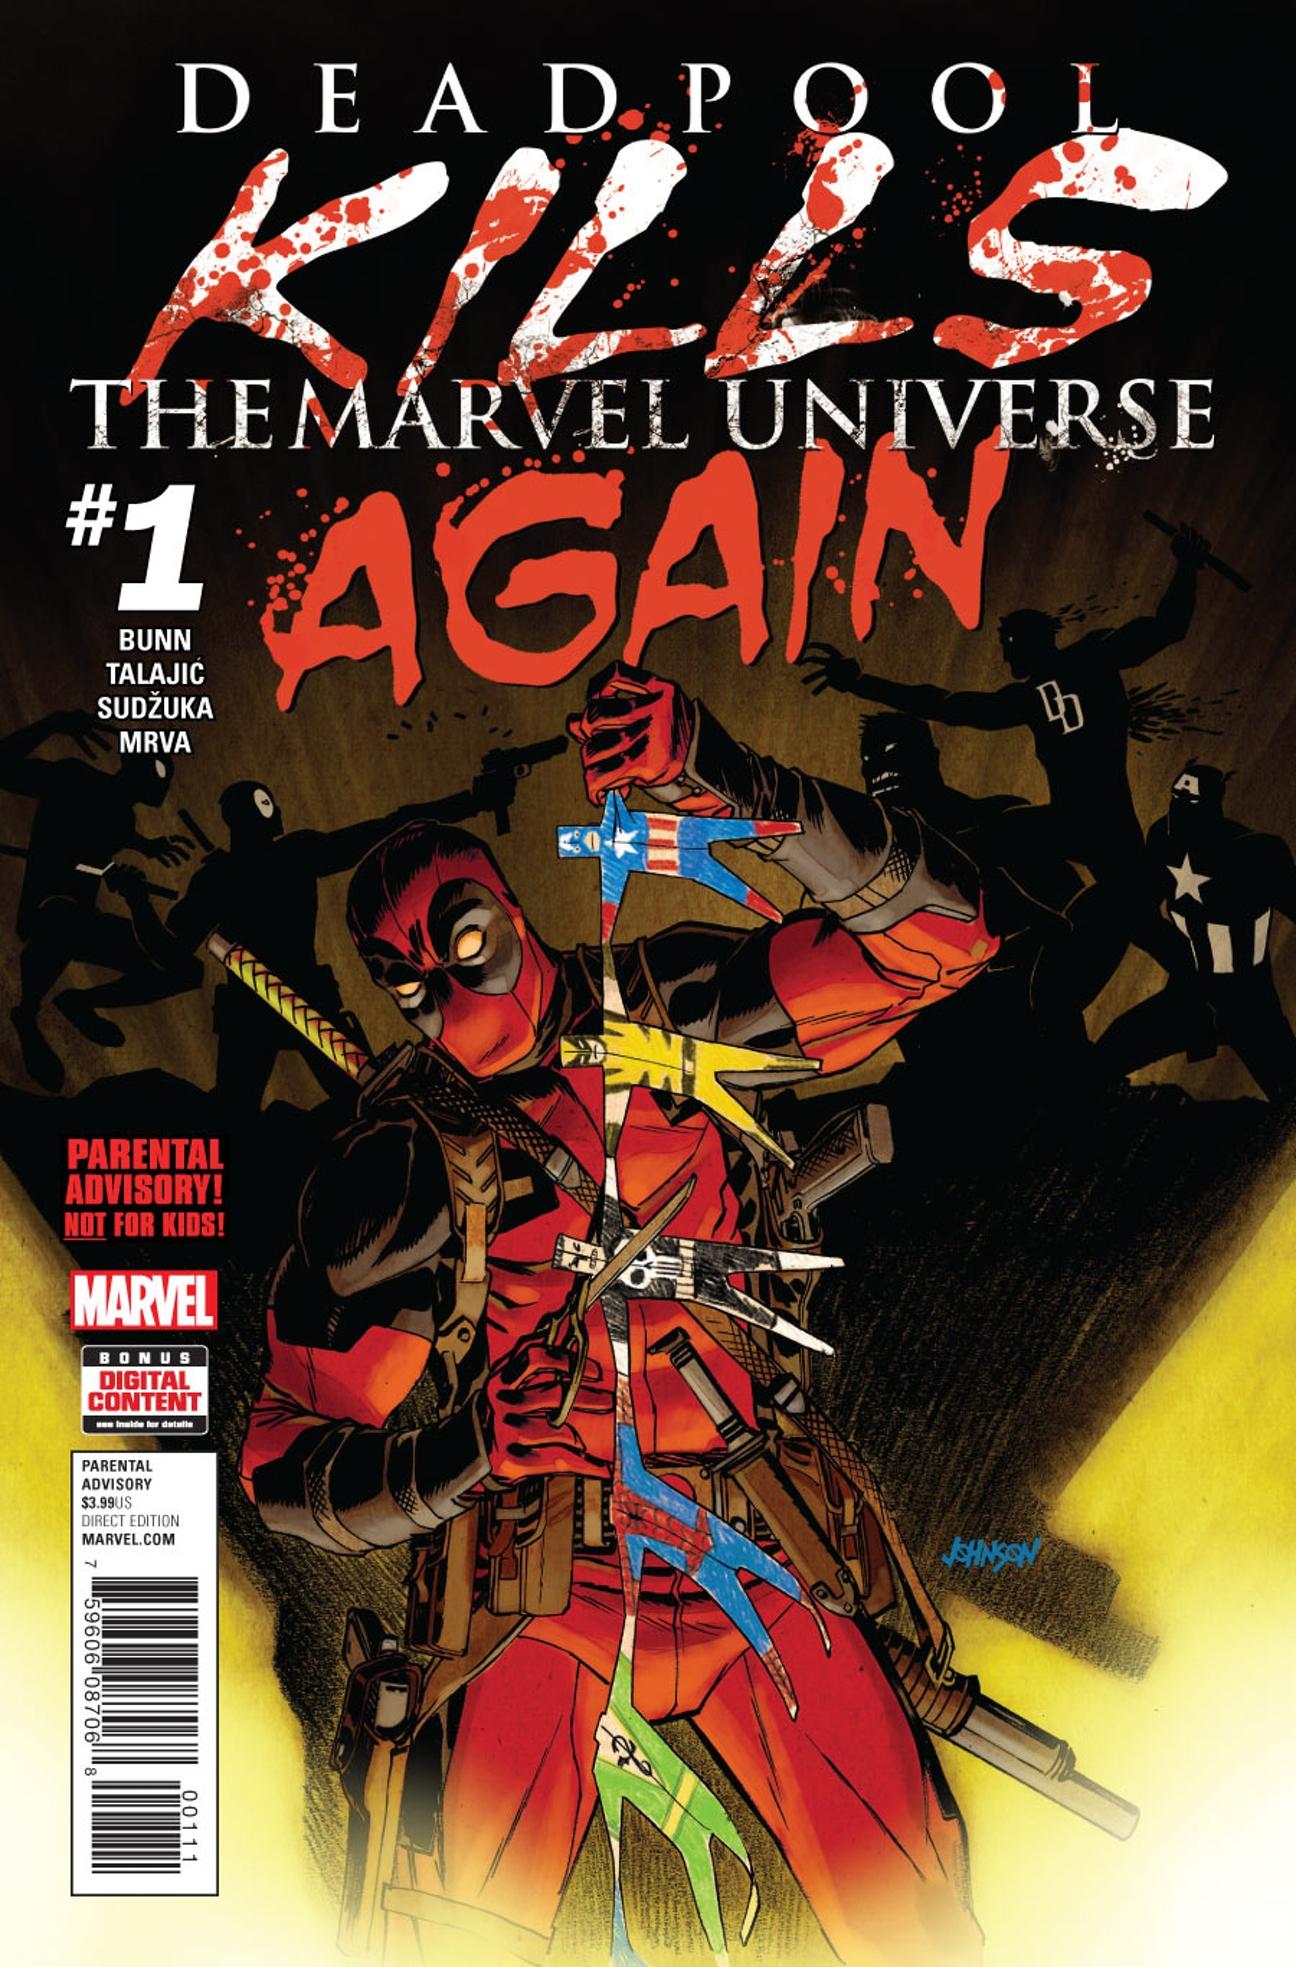 Deadpool Kills the Marvel Universe Again Vol. 1 #1